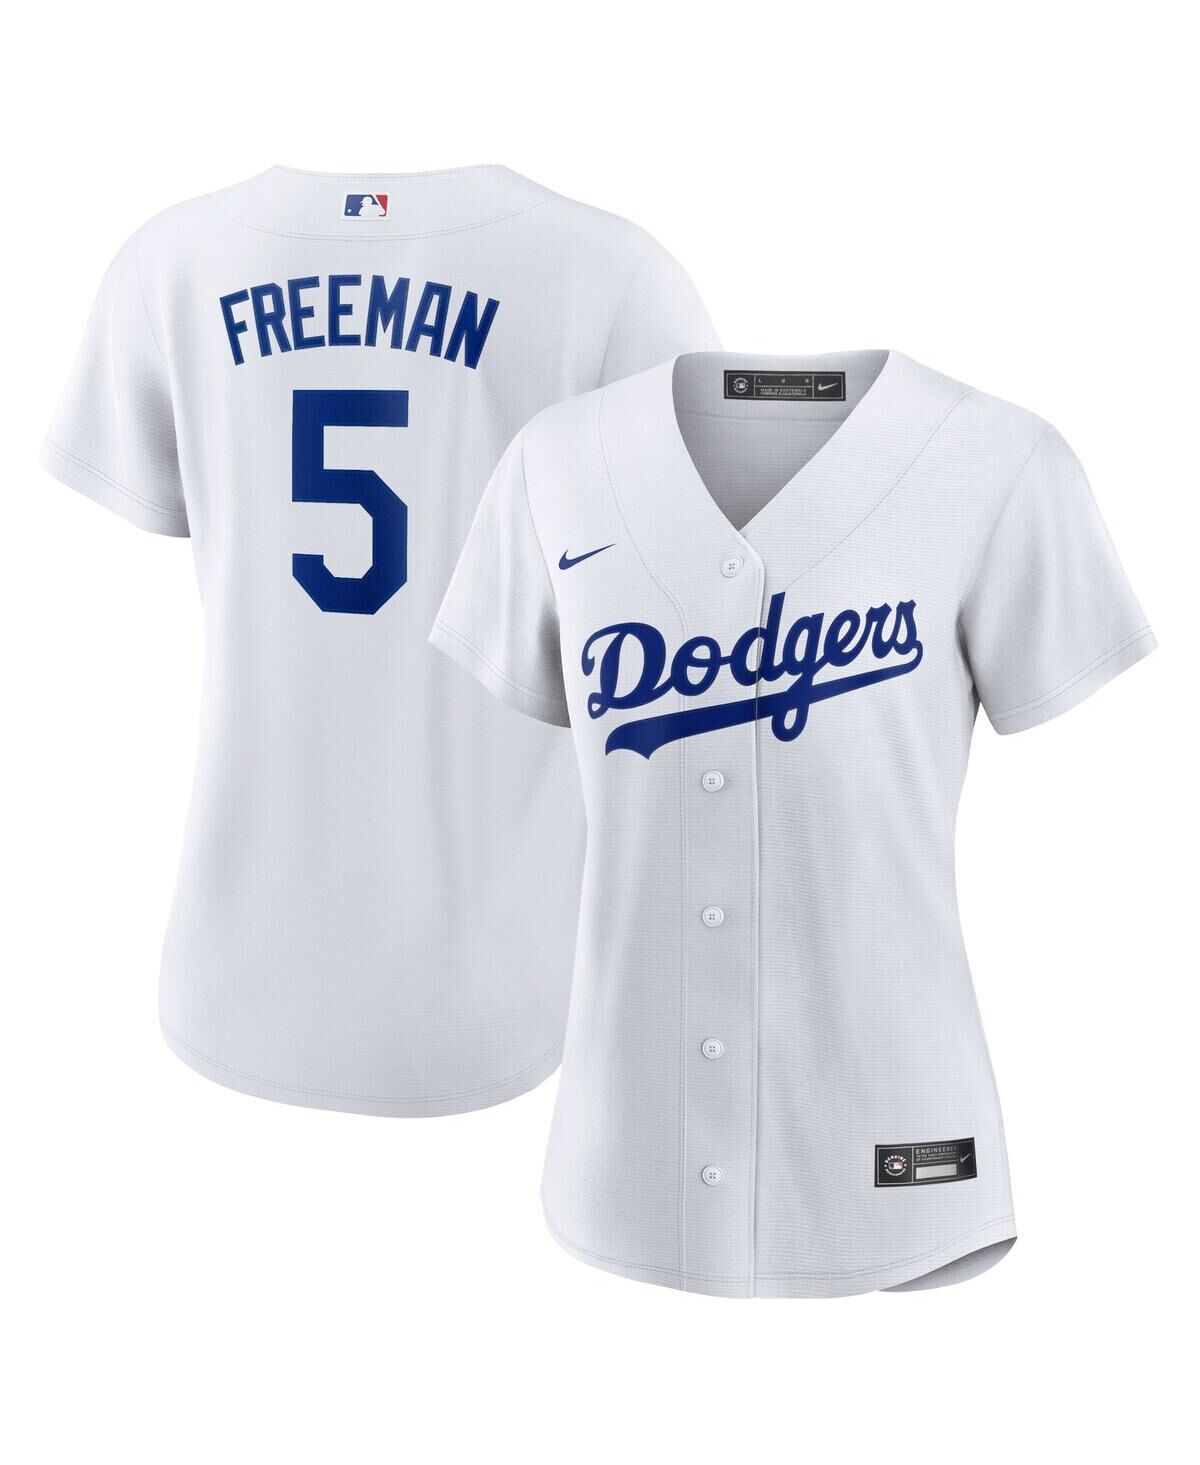 Nike Women's Nike Freddie Freeman White Los Angeles Dodgers Replica Player Jersey - White